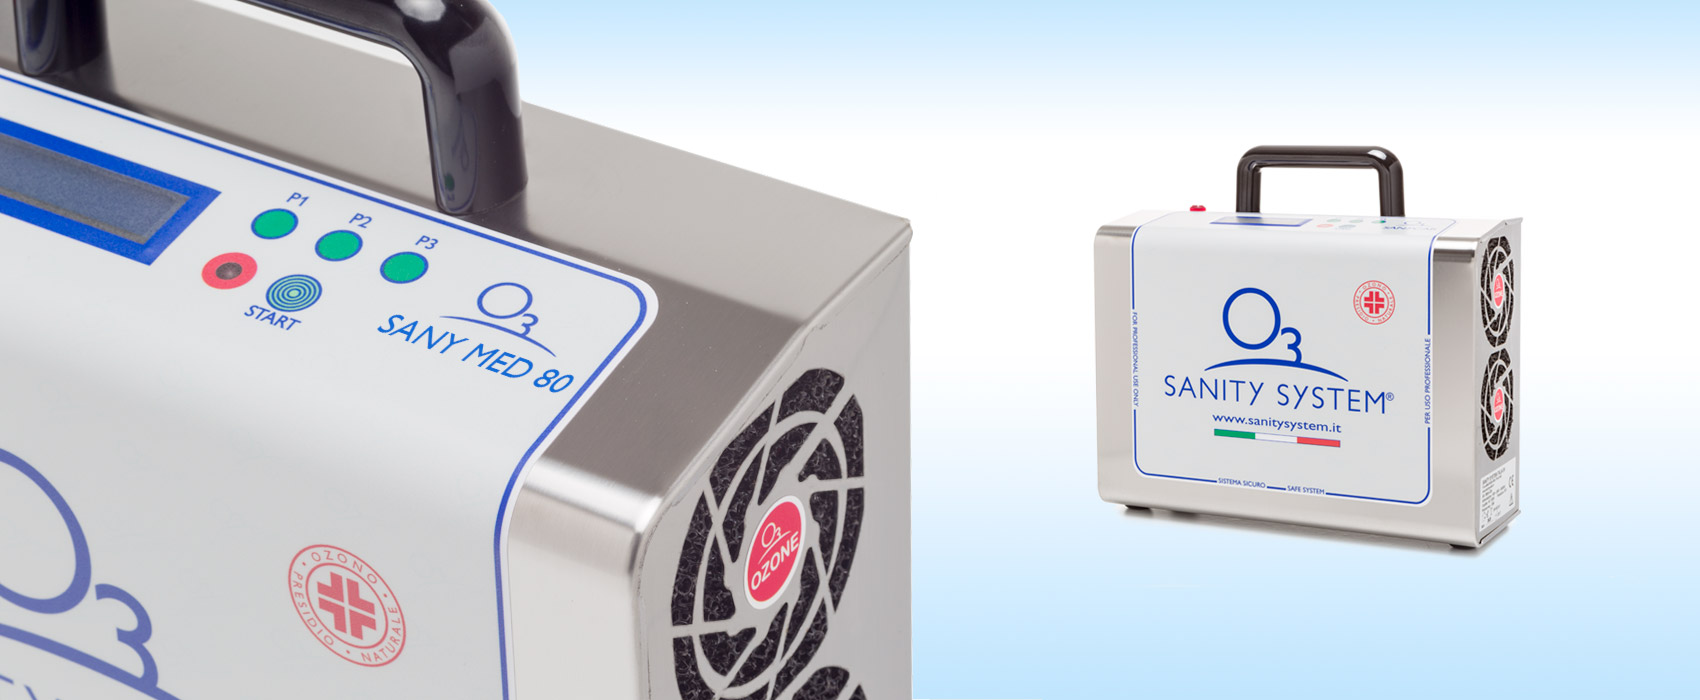 SANY-MED-80 - Sanity System